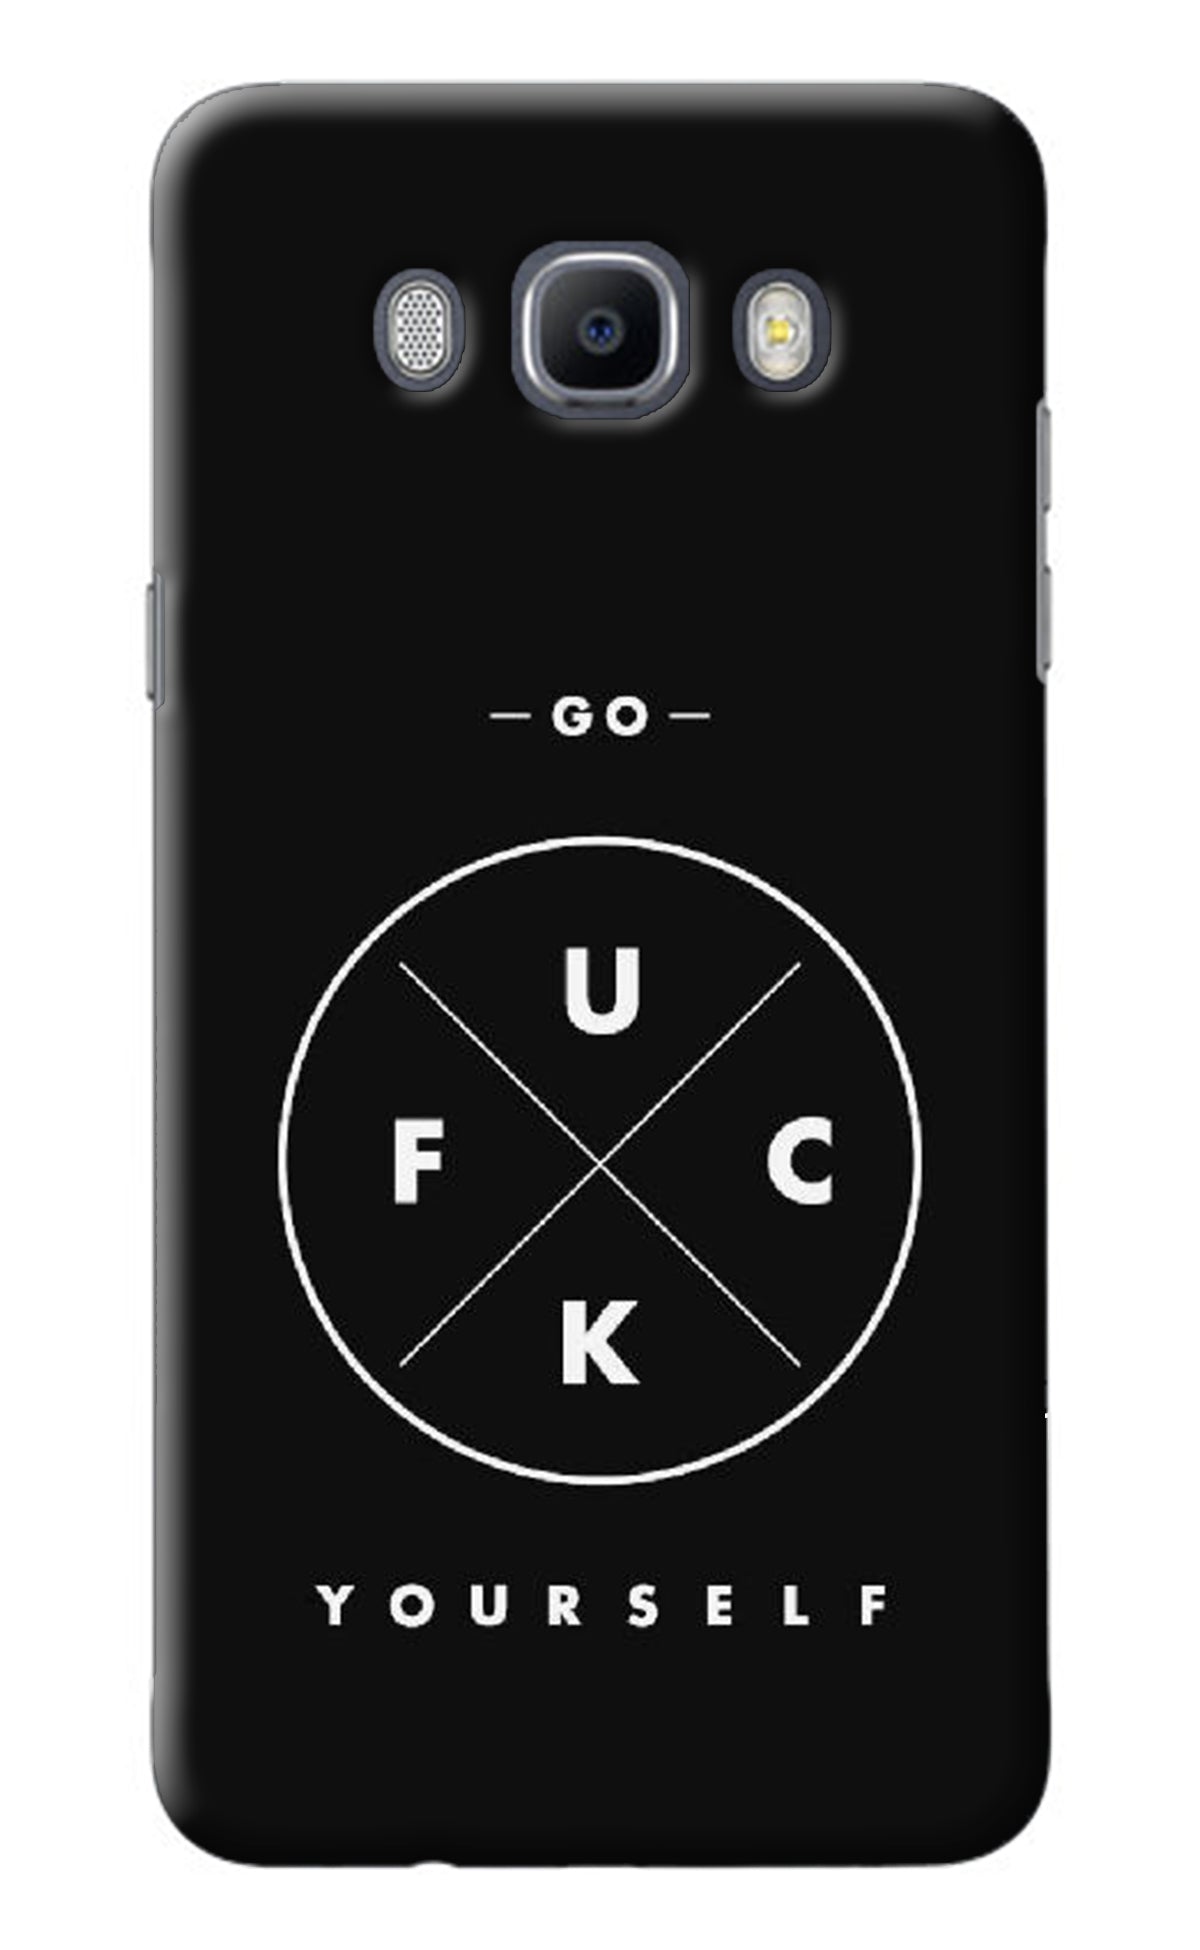 Go Fuck Yourself Samsung J7 2016 Back Cover